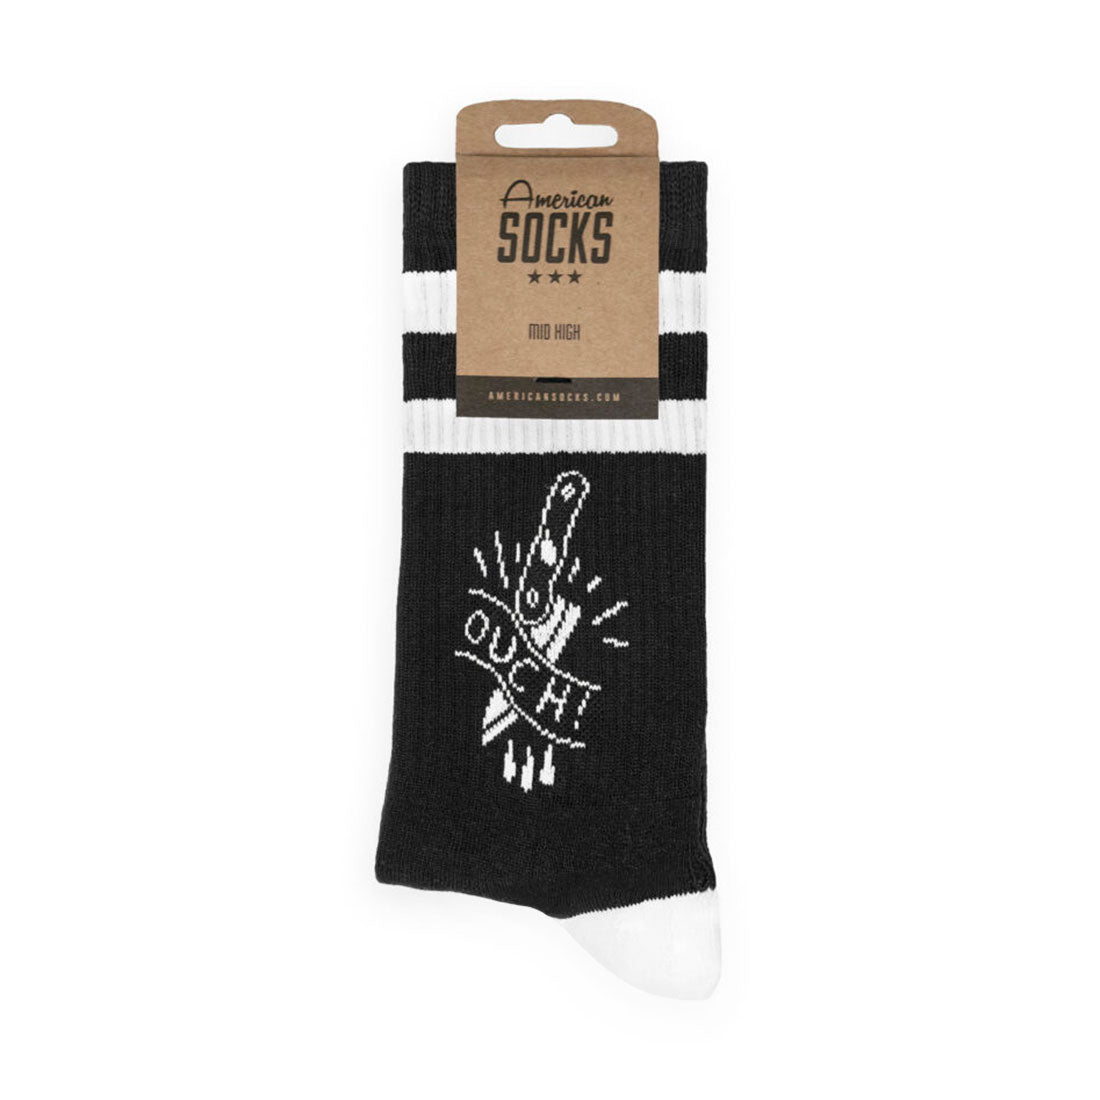 American Socks Design - Ouch Apparel Socks